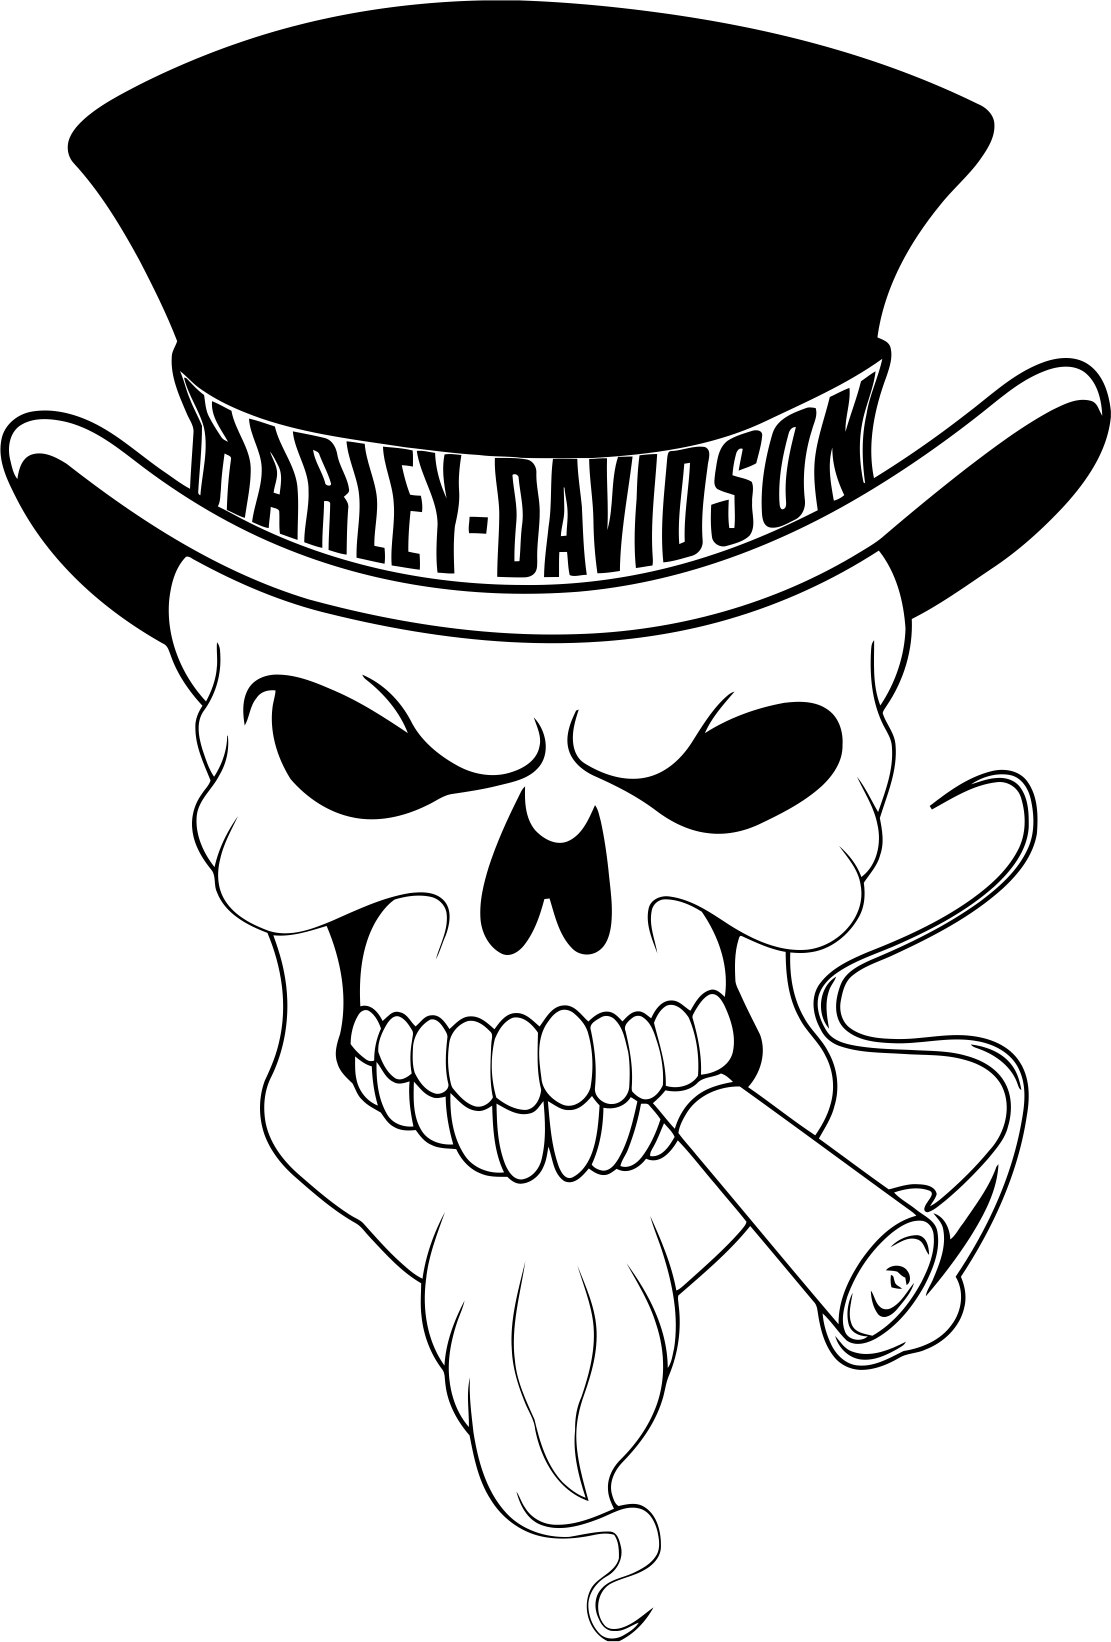 Harley Davidson Skull Vector Free Vector cdr Download - 3axis.co